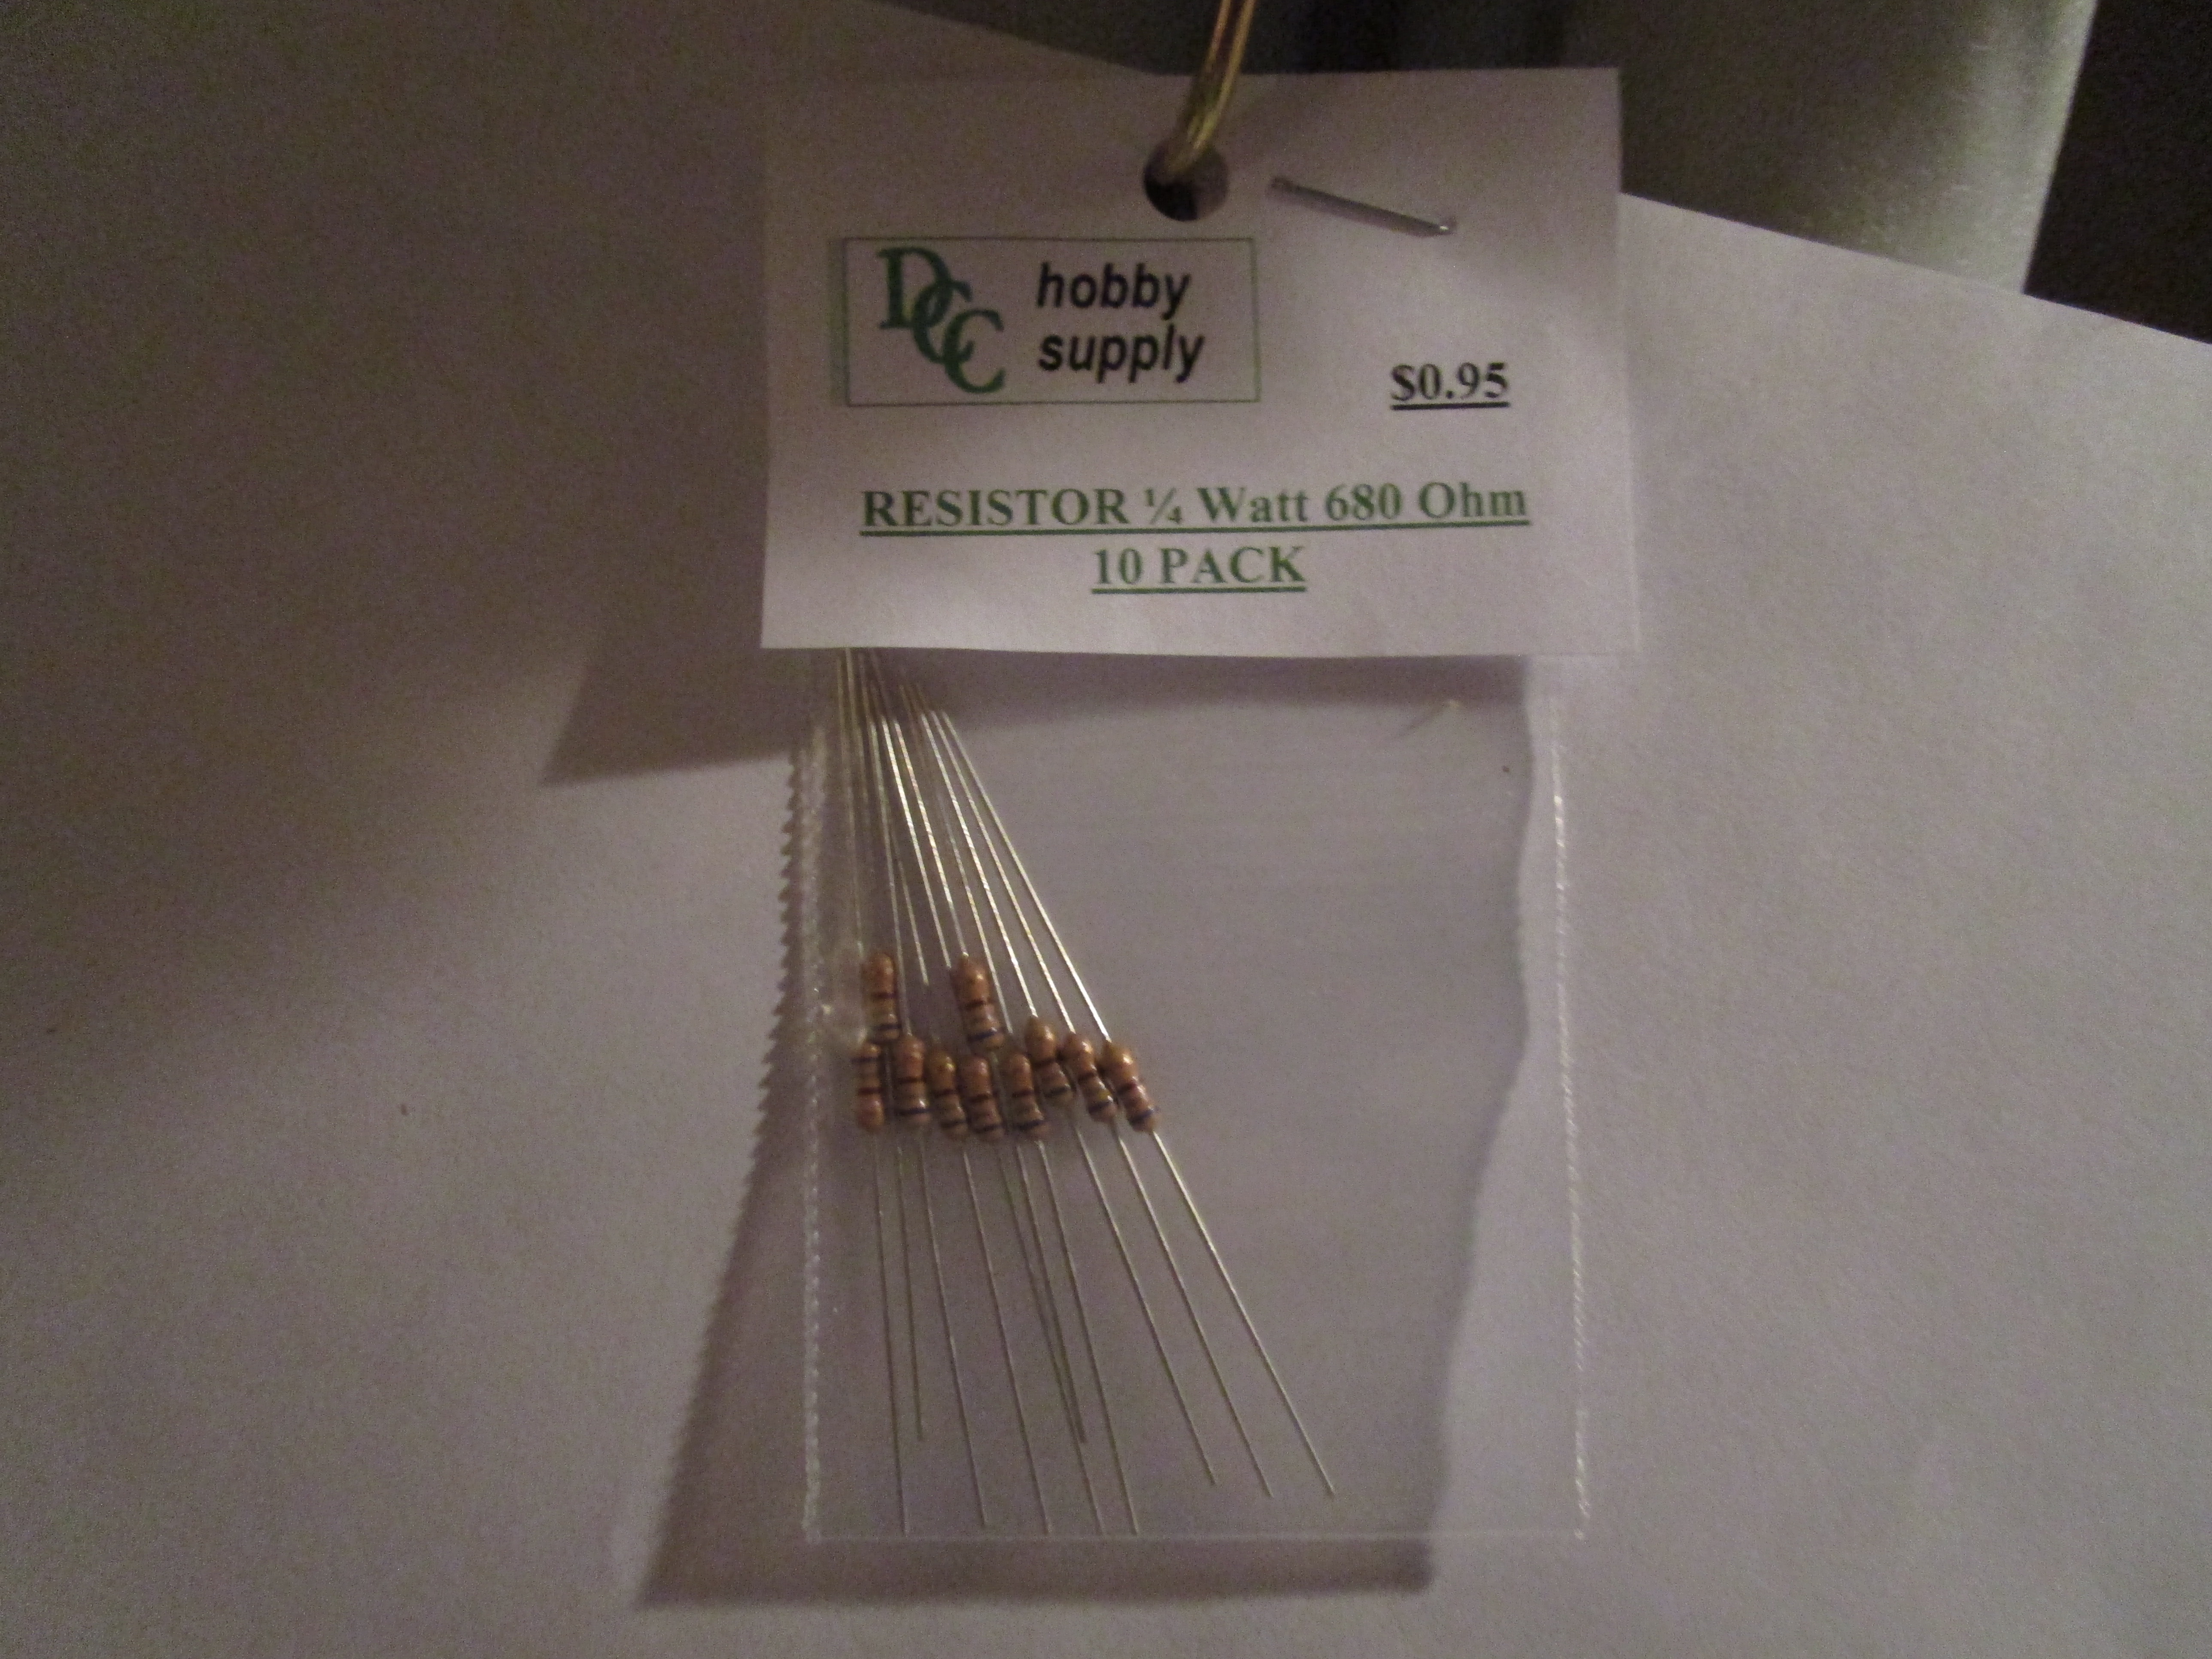 Resistor, 1/4 watt 680 Ohm (10 pack)